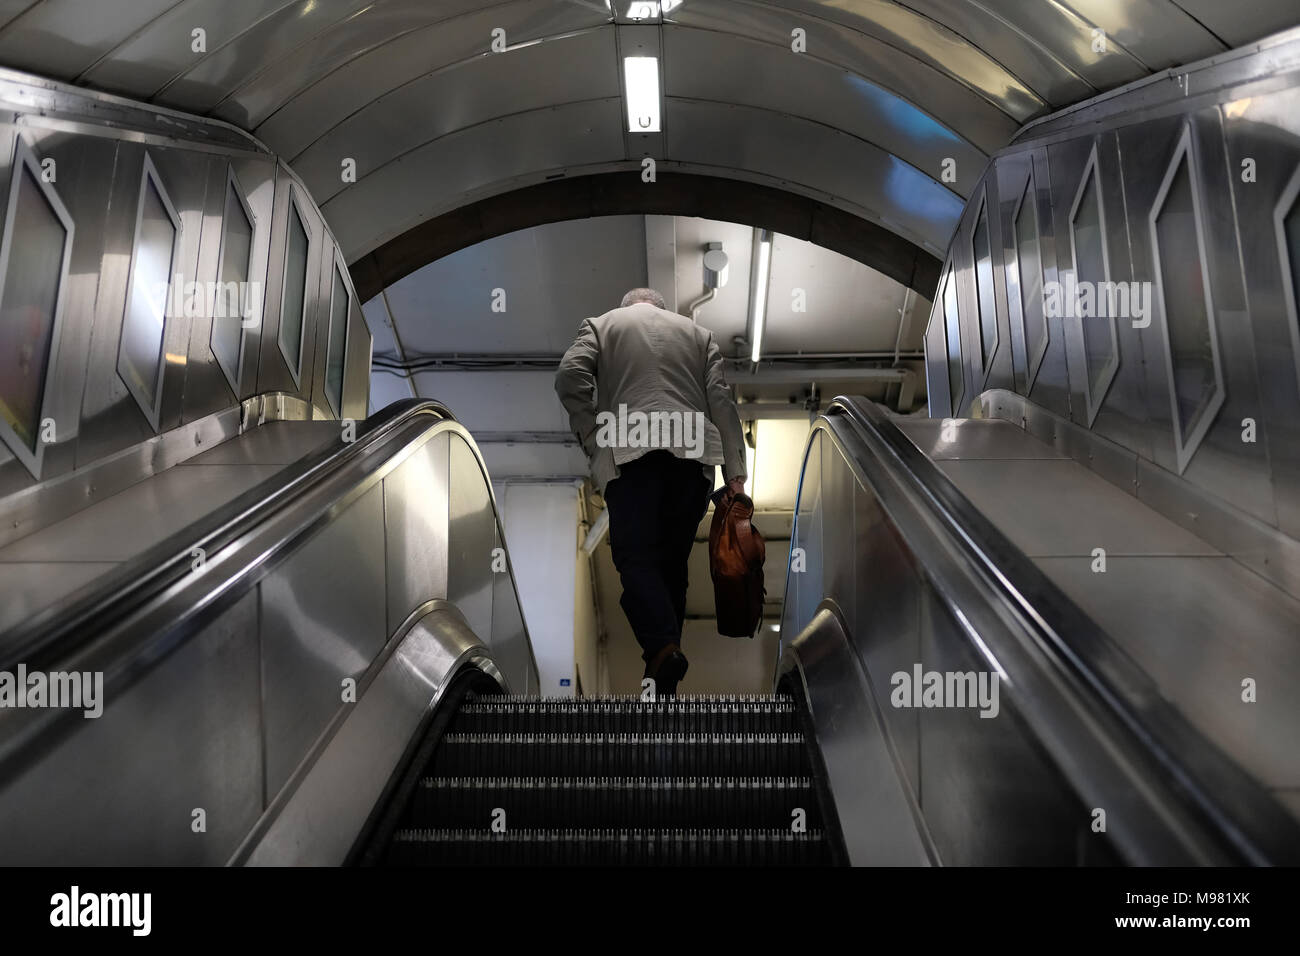 Man stepping off escalator on London Underground Stock Photo